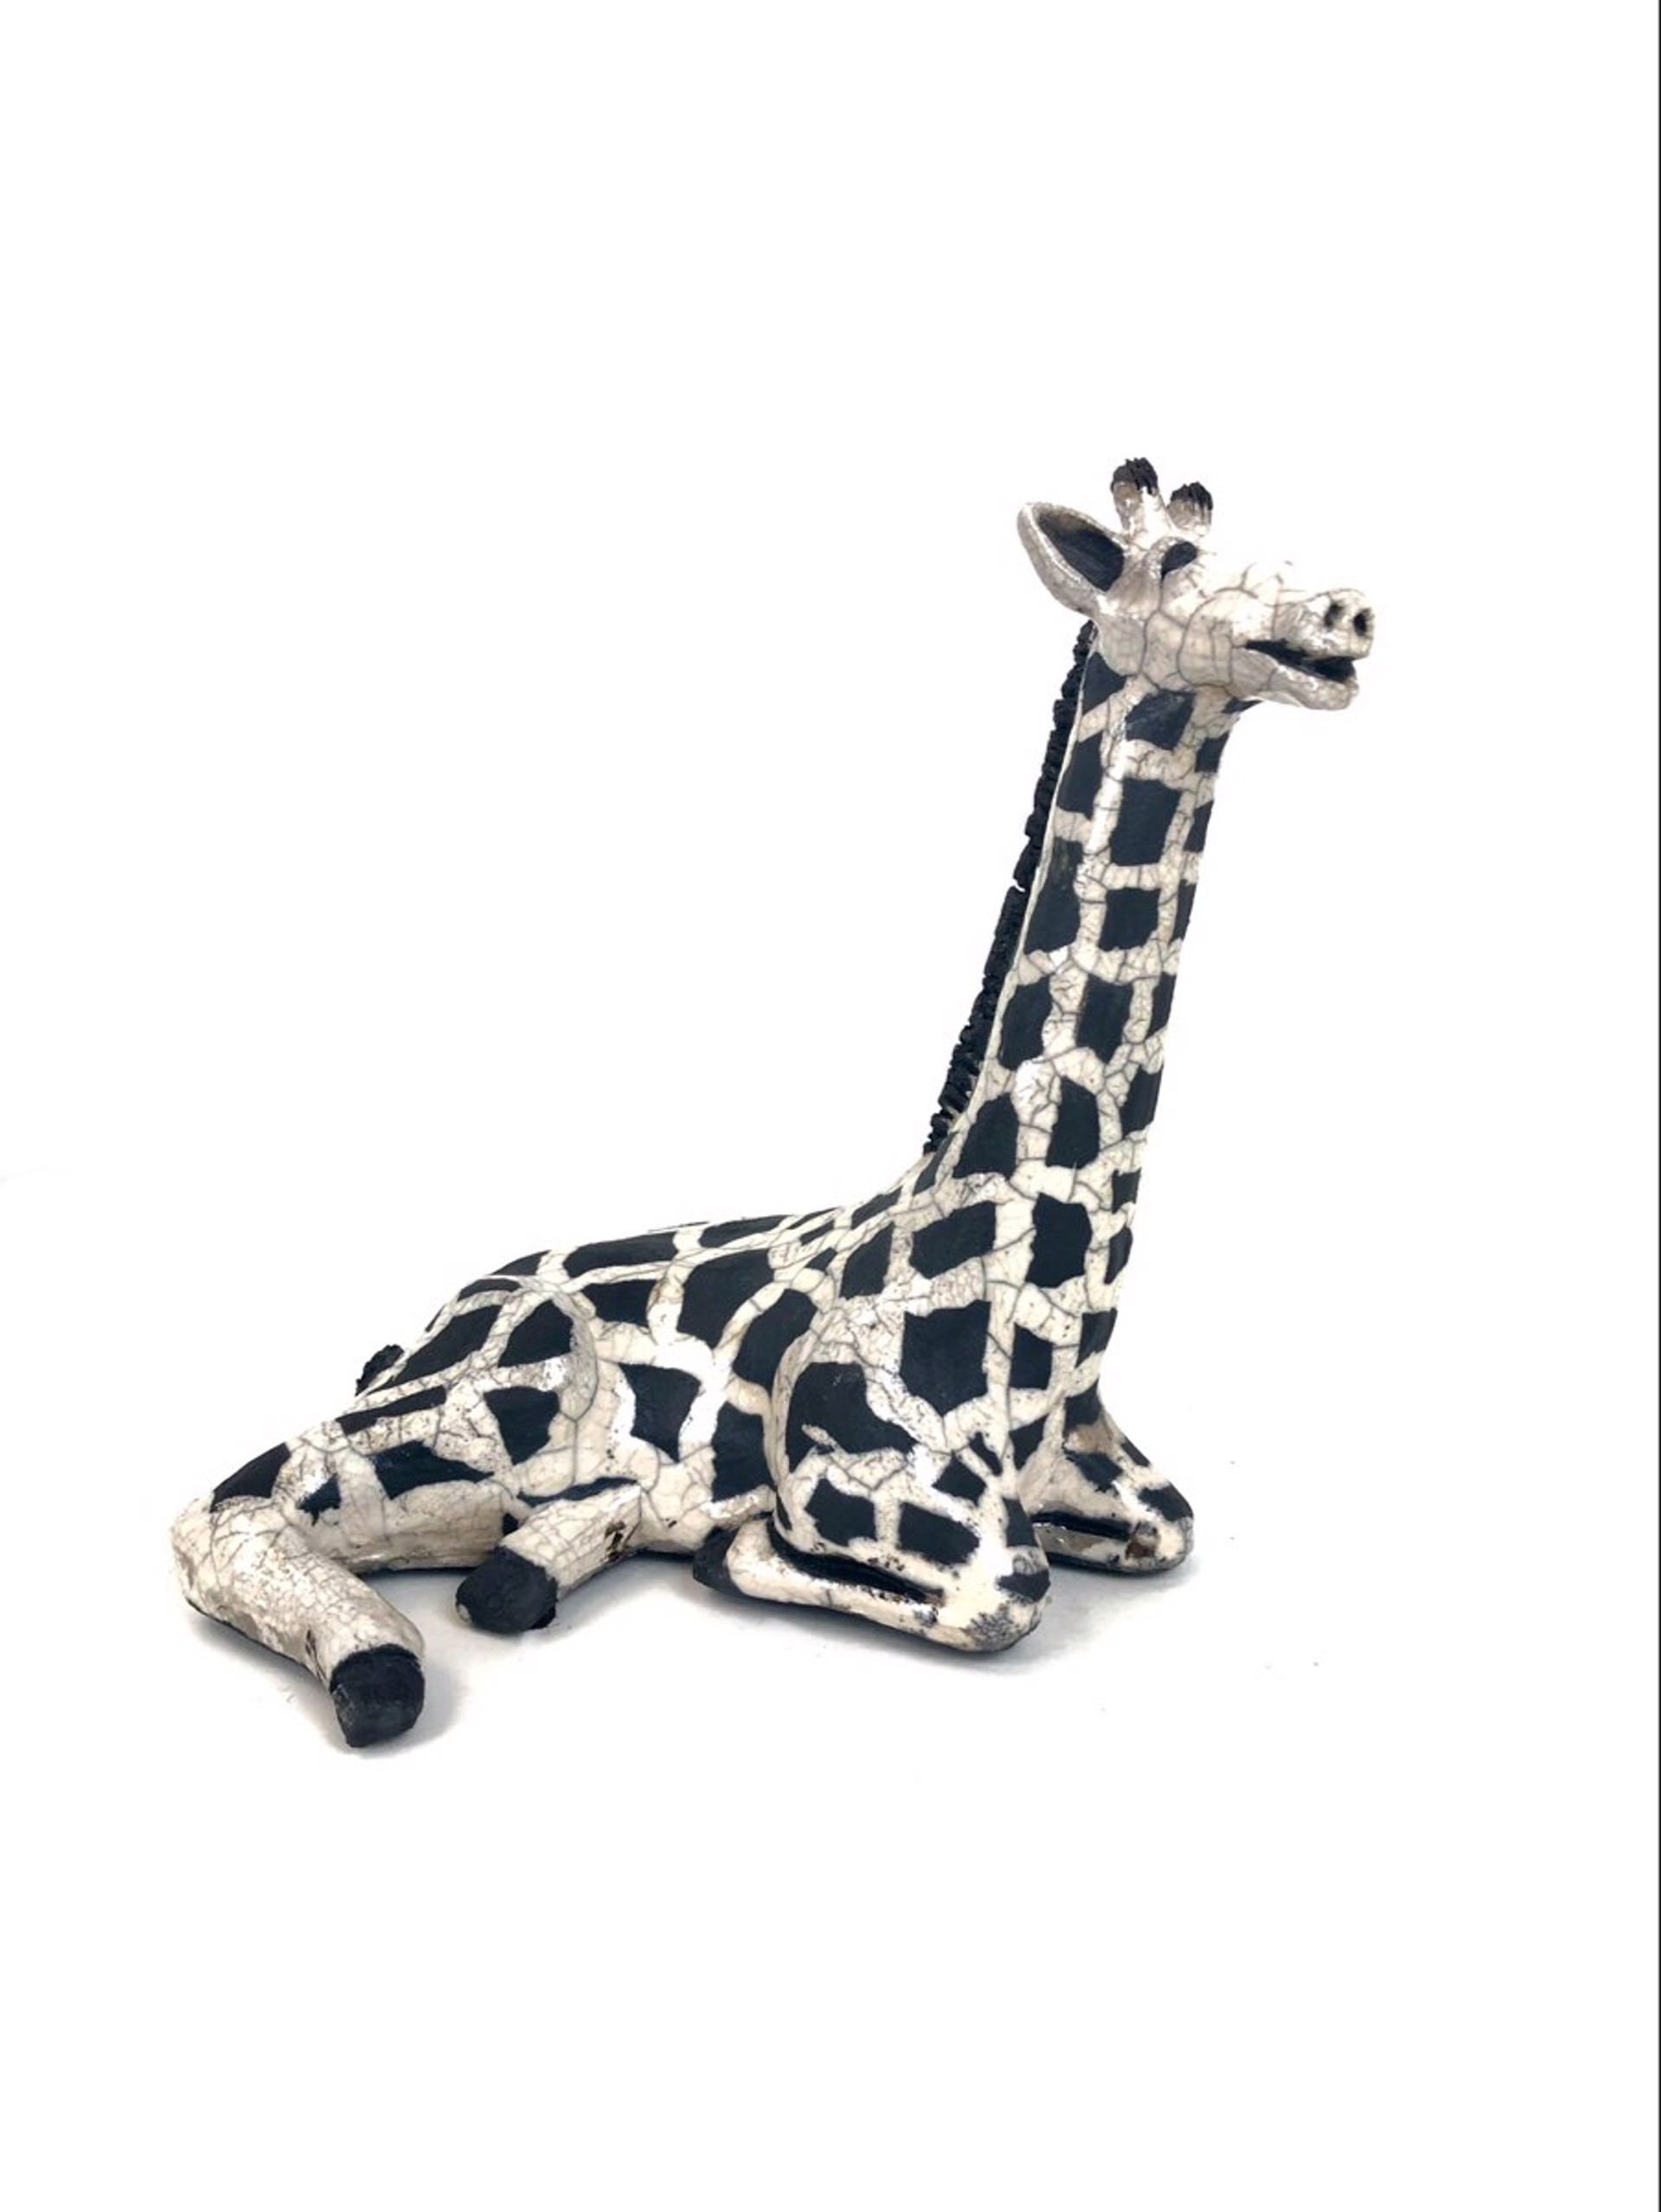 Giraffe by Susan Lawless